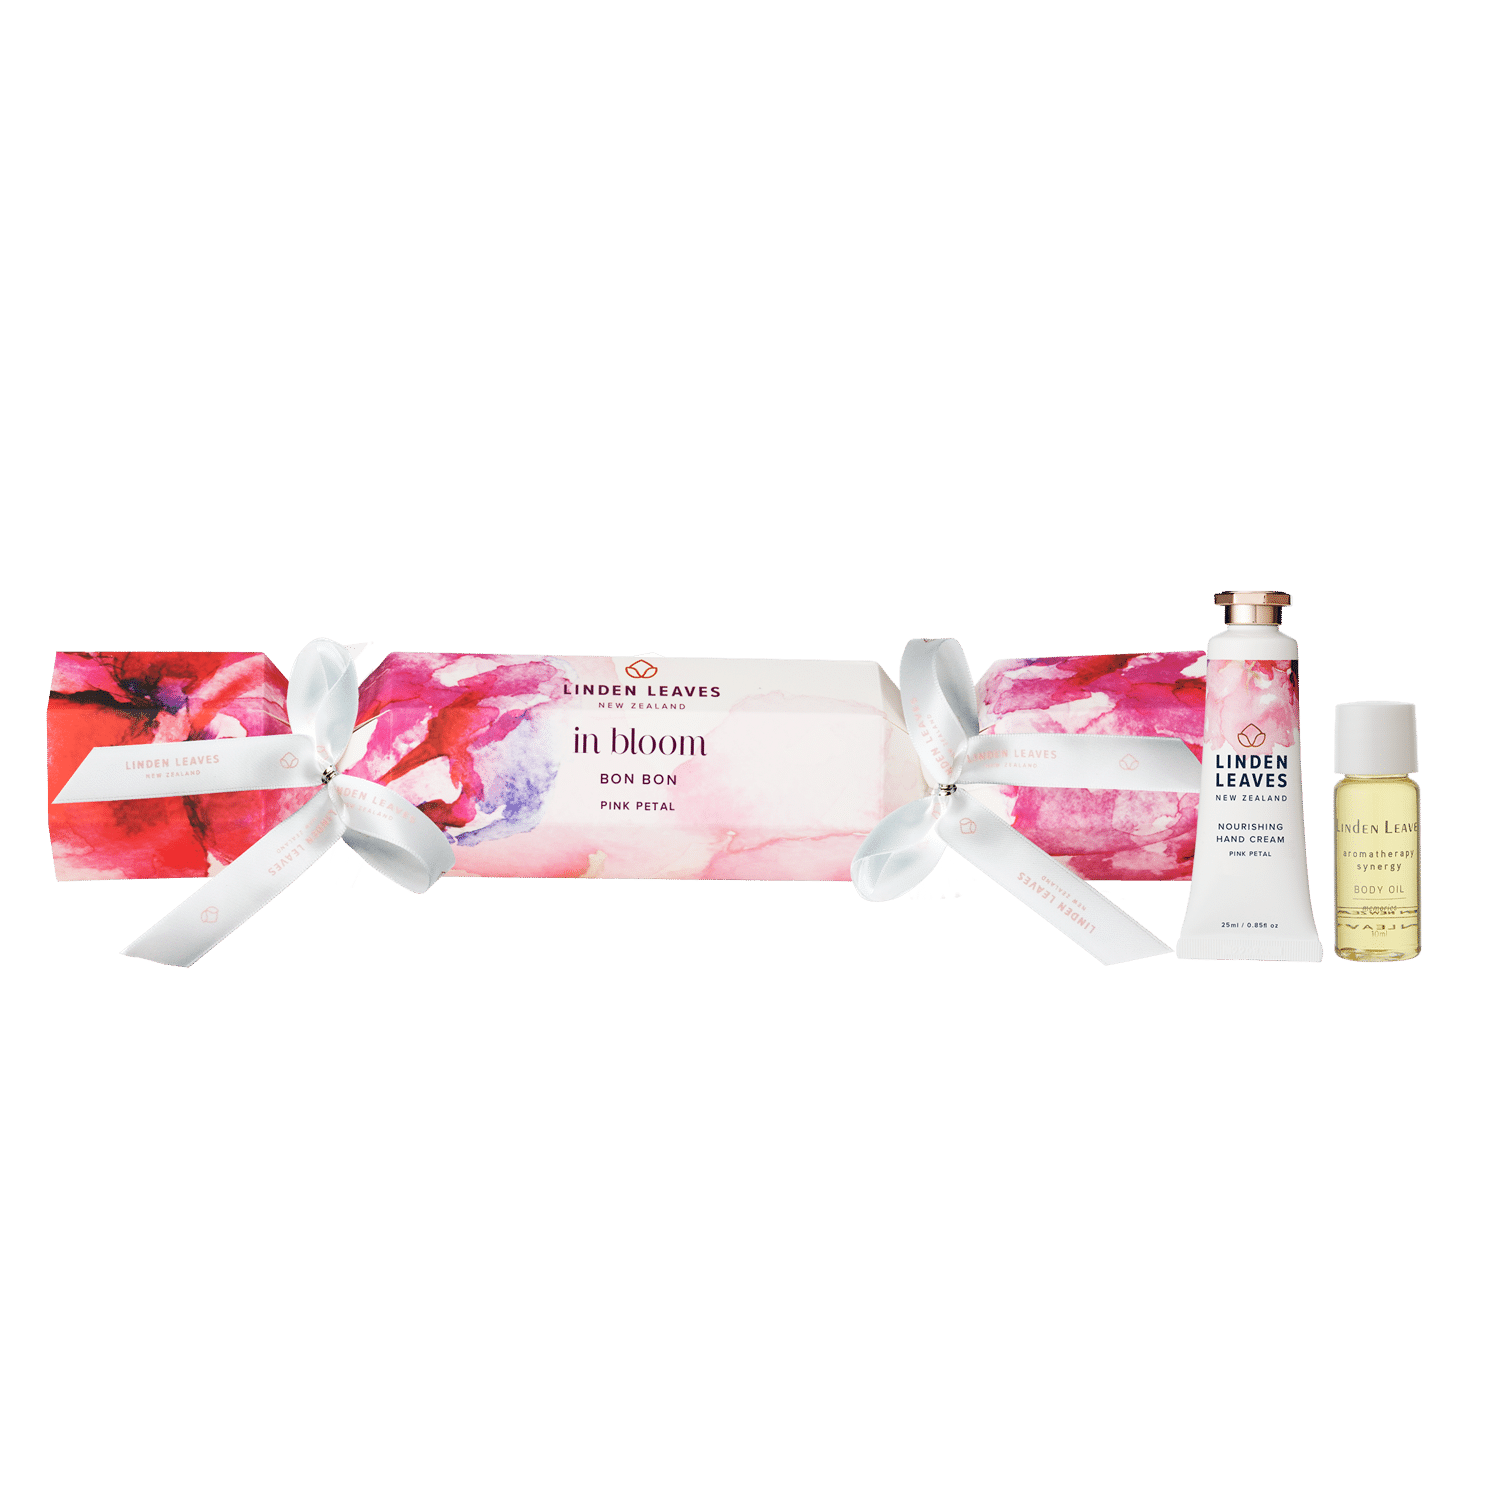 Best body oil and hand cream bon bon in pink petal